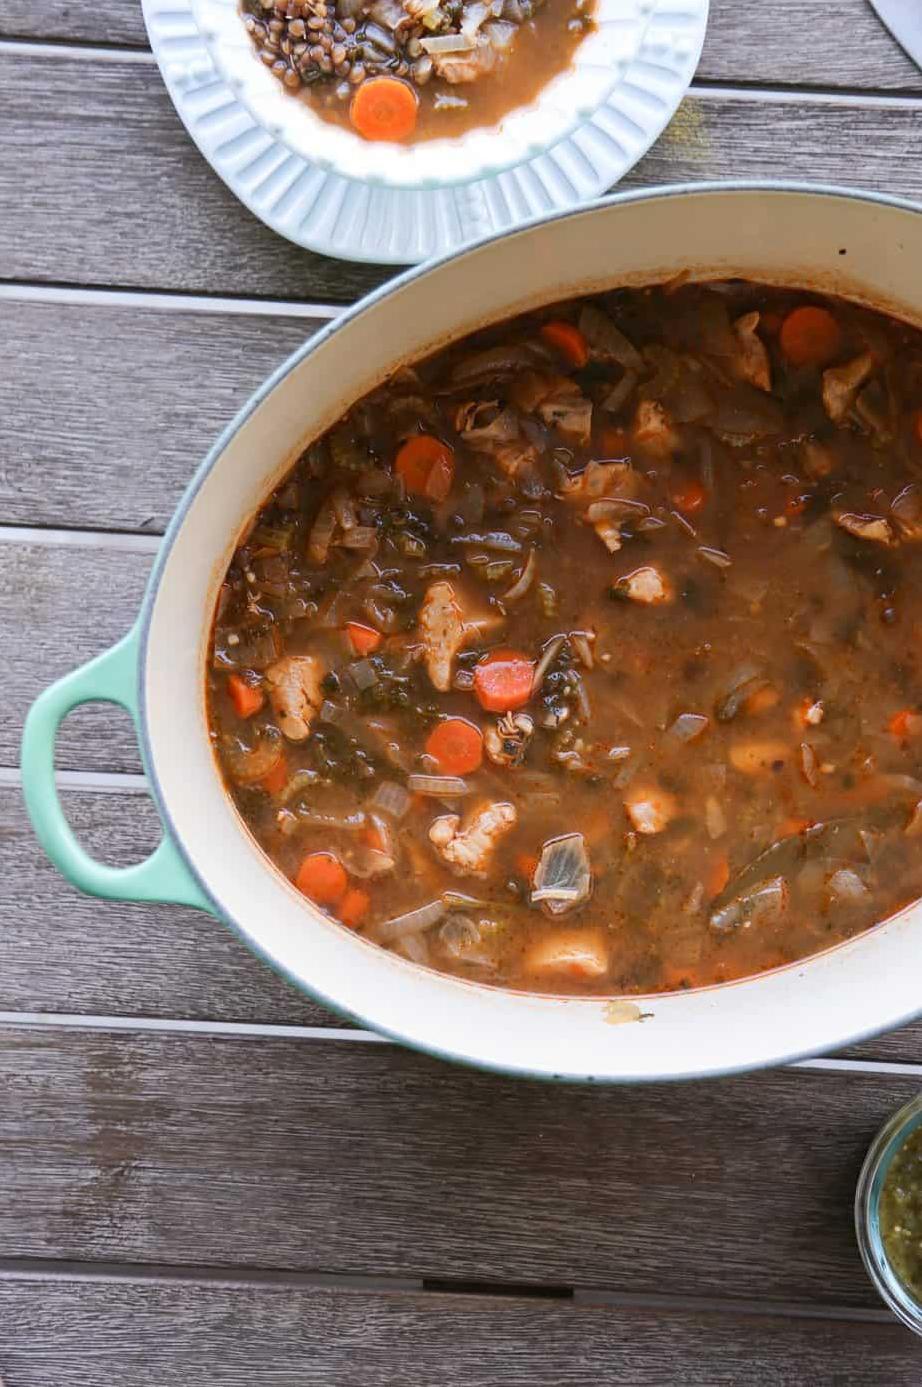  Load your bowl up with lentil and vegetable rich progresso lentil soup.